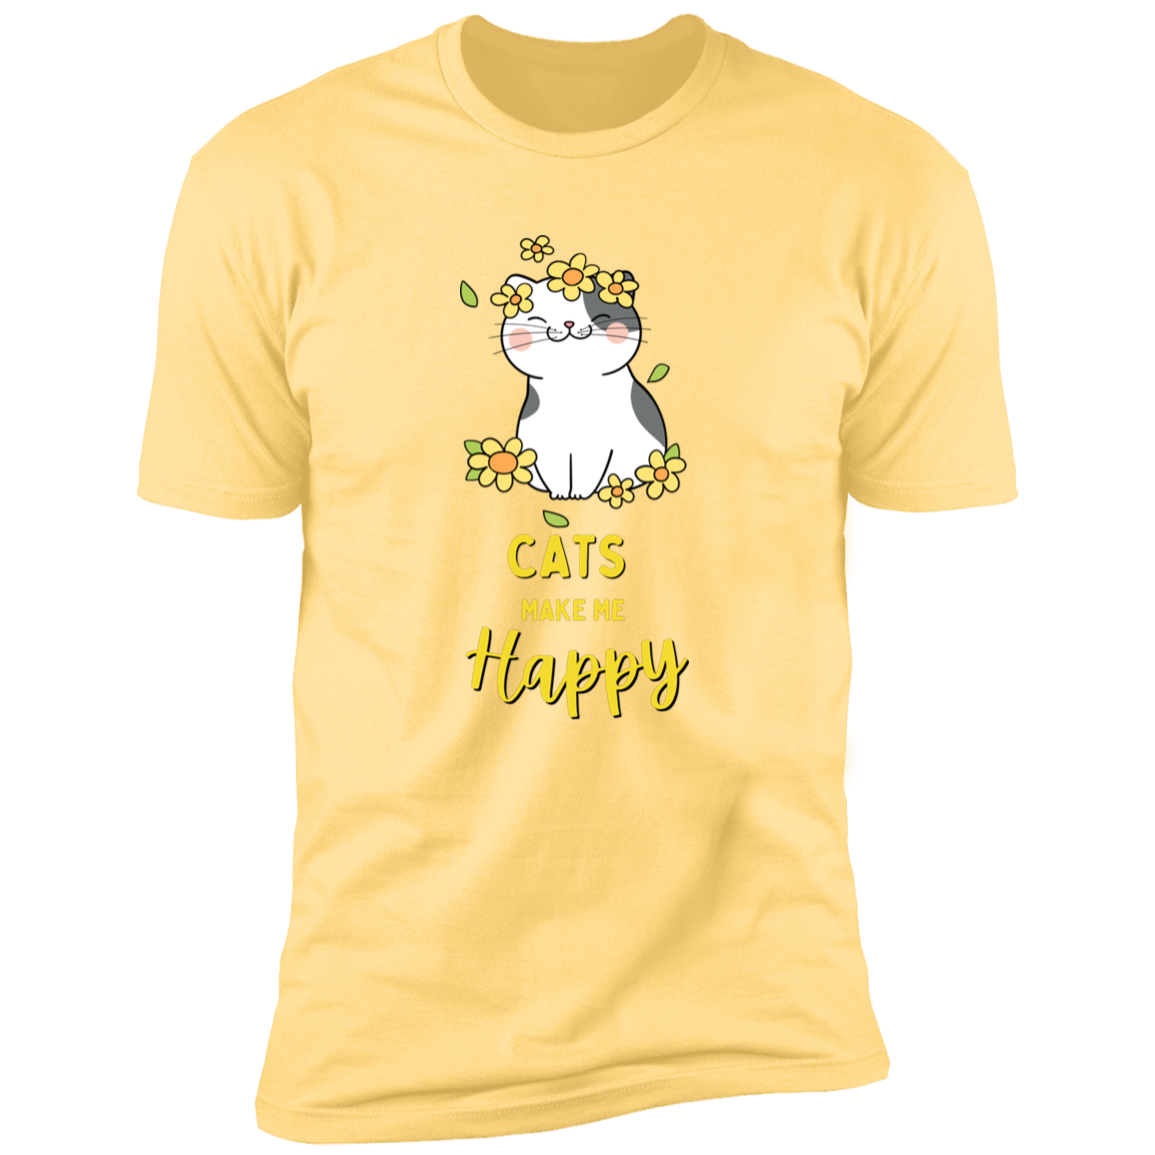 Cats Make Me Happy T-shirt, Cat Shirt for humans, in banana cream